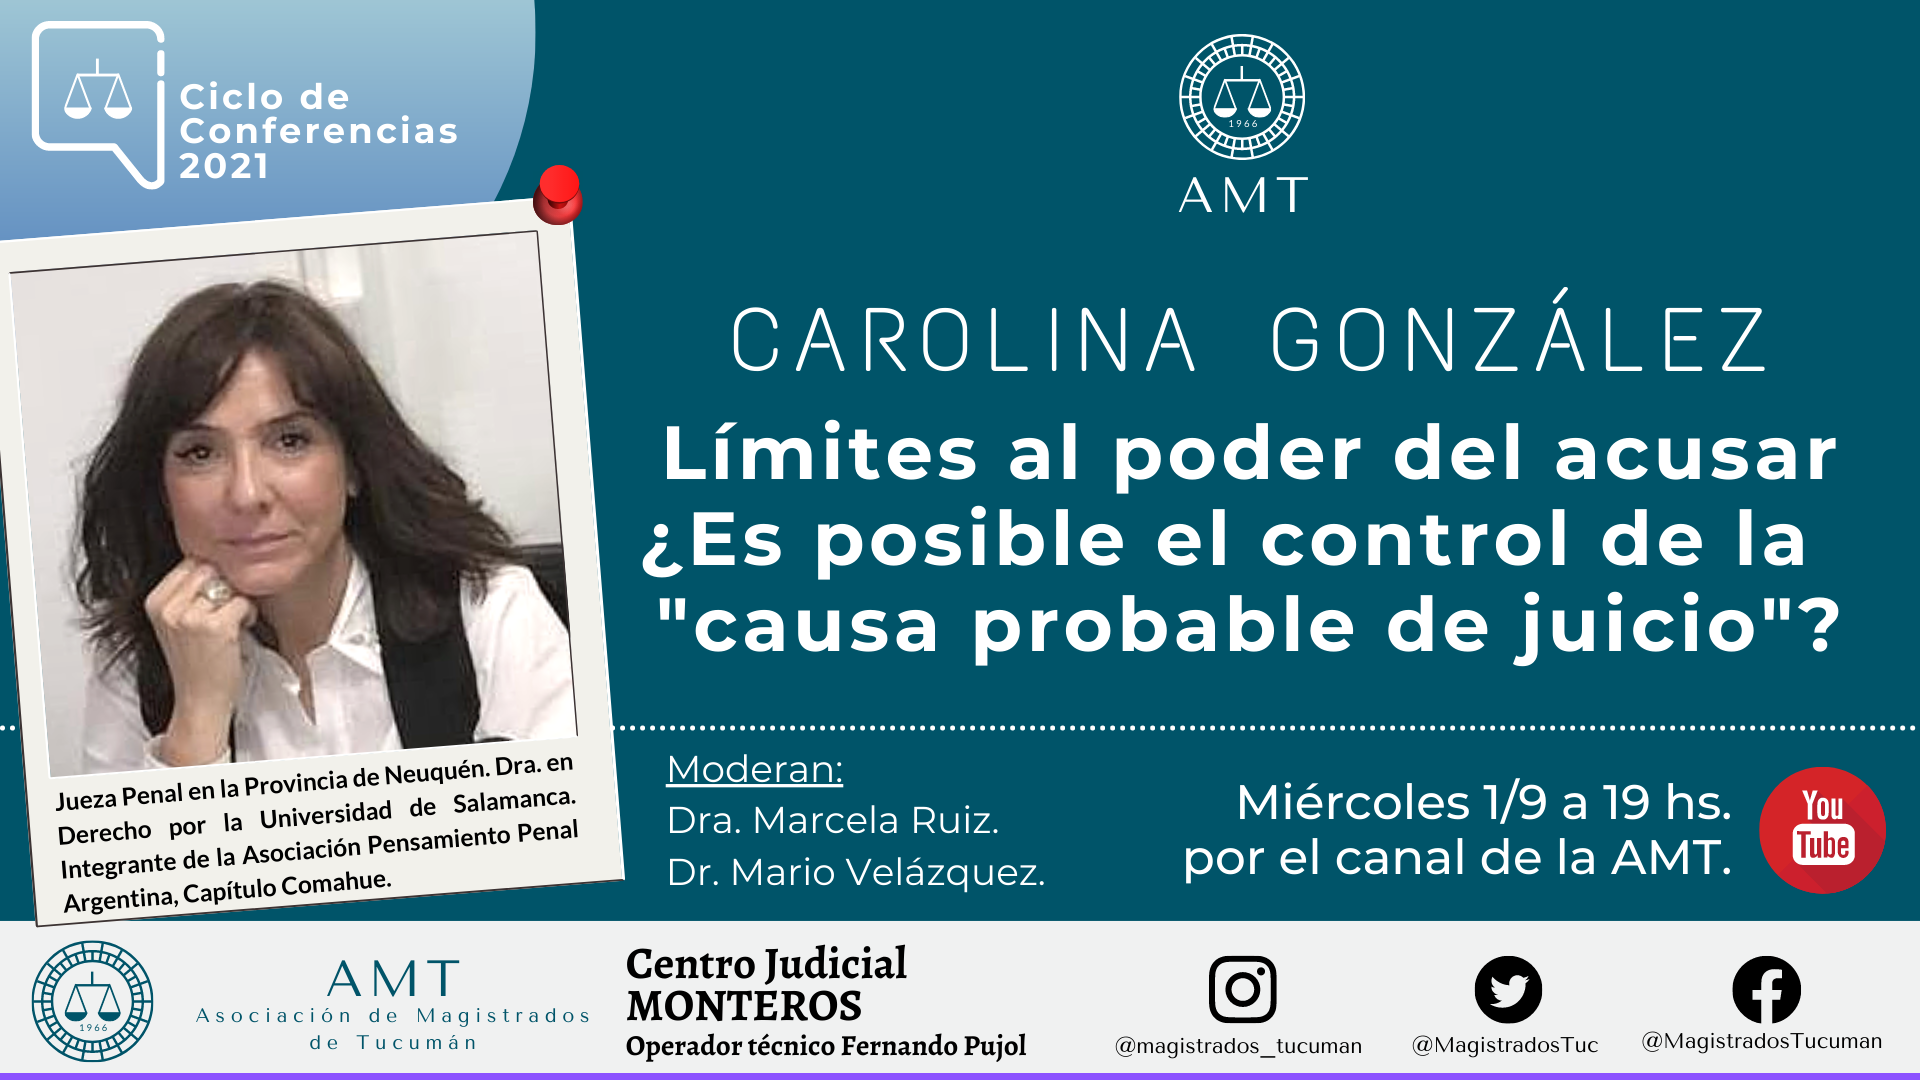 Vuelva a ver la conferencia de Carolina González «Límites al poder del acusar»